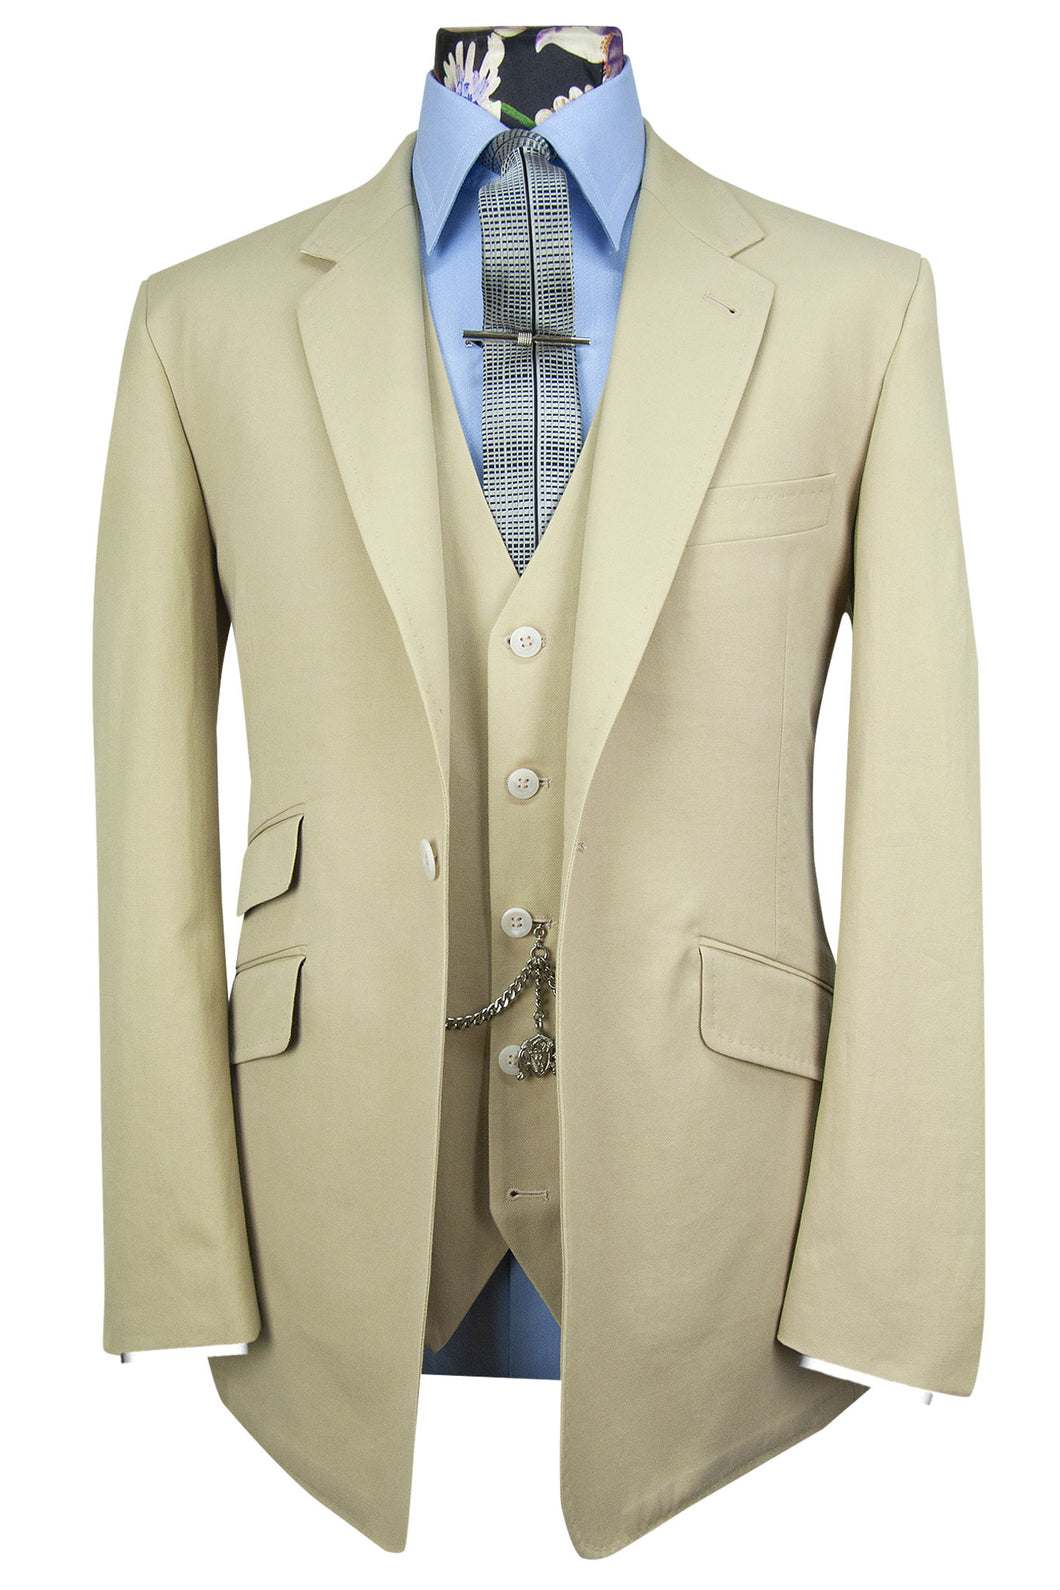 The Portia Sand Beige Suit